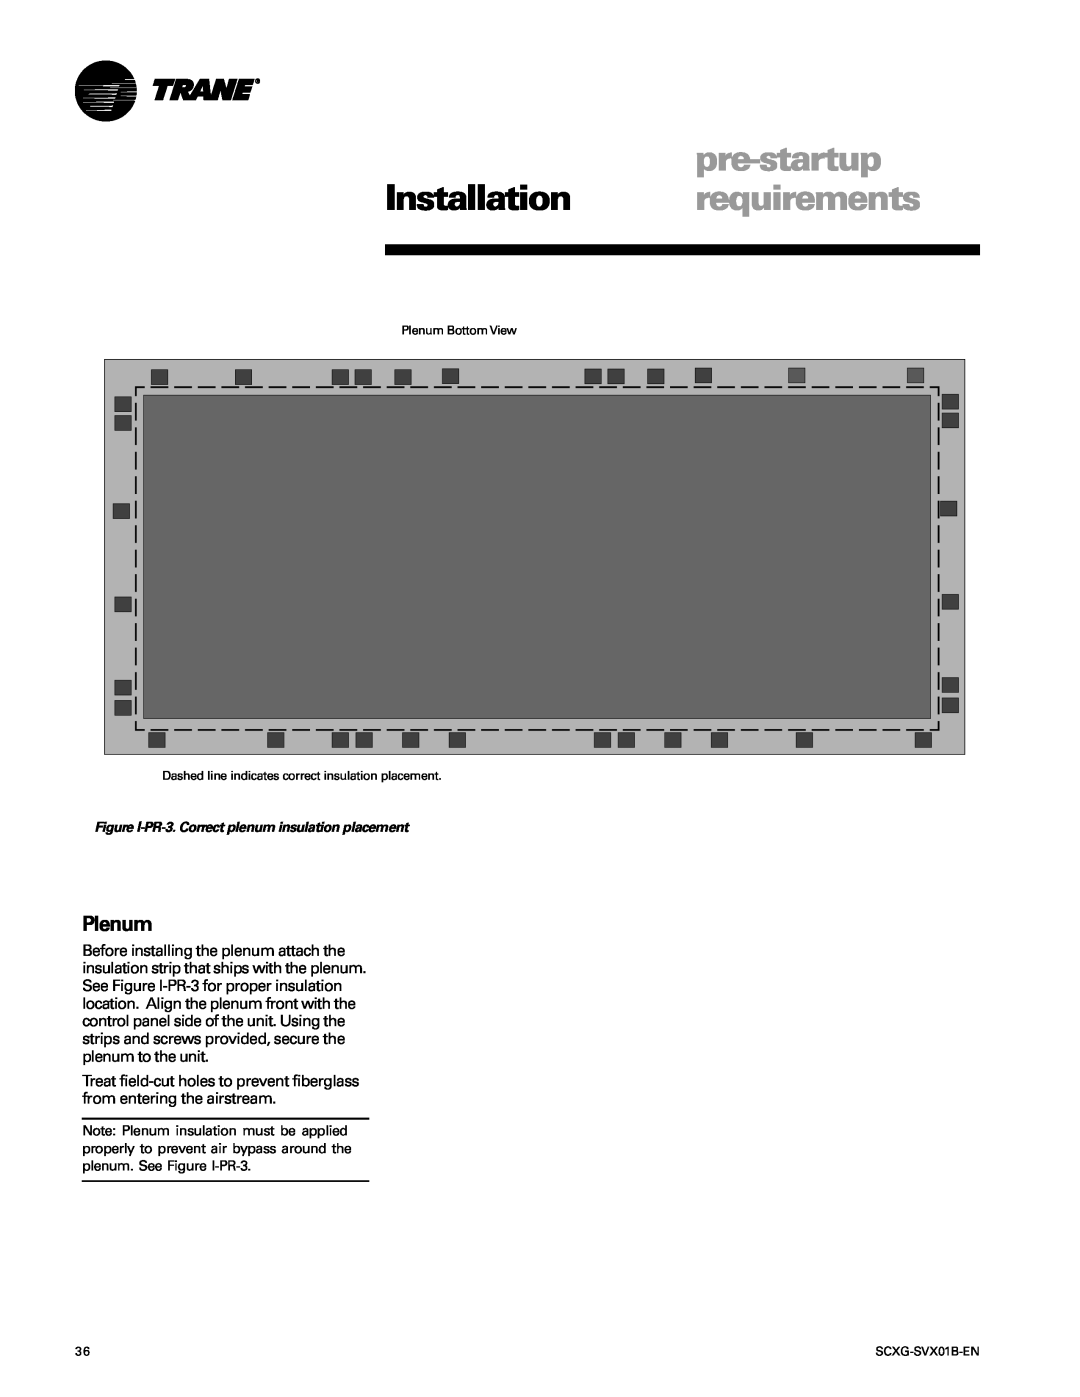 Trane SCXG-SVX01B-EN Plenum, pre-startup, Installation requirements, Figure I-PR-3.Correct plenum insulation placement 